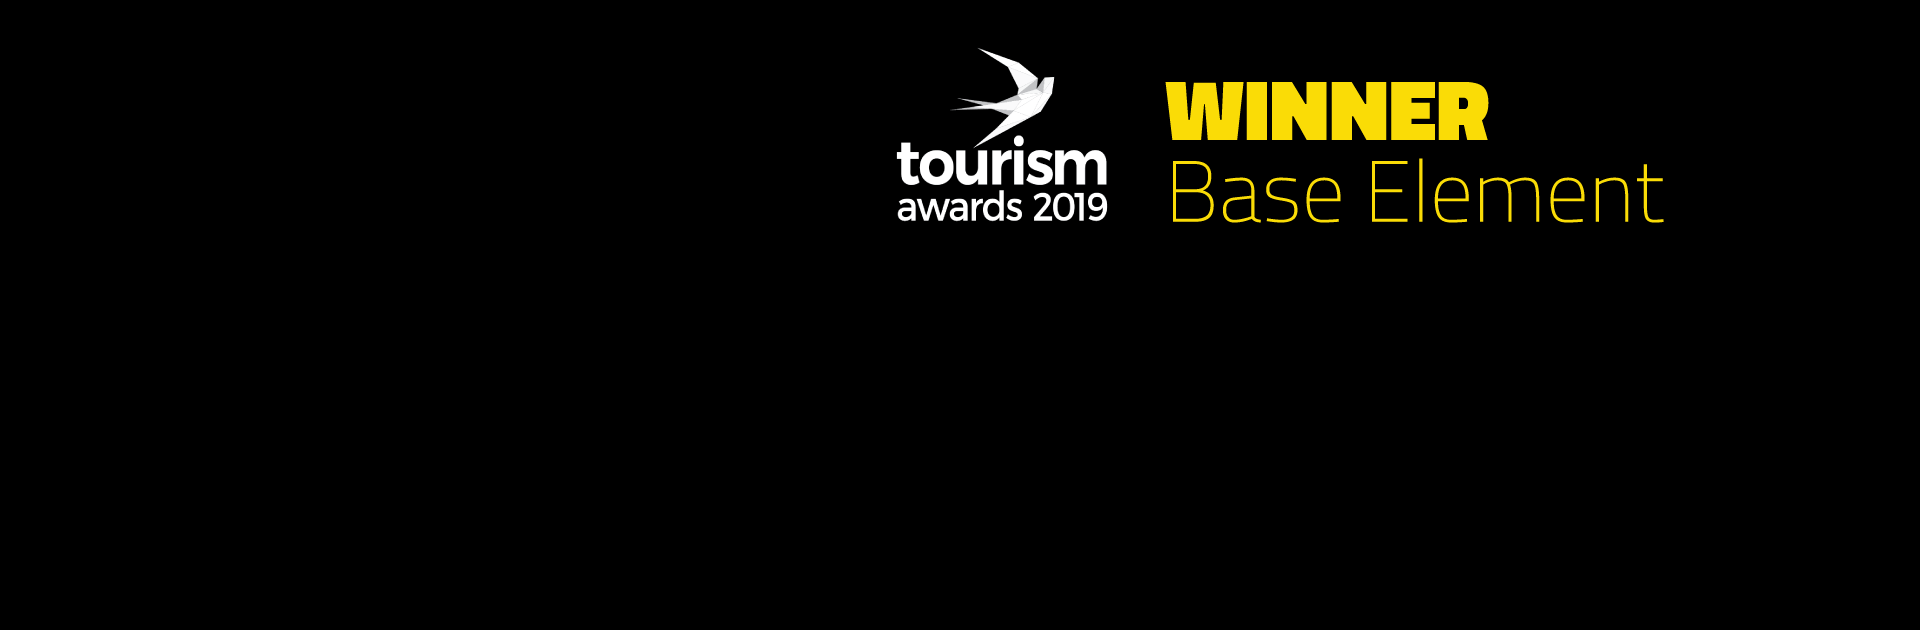 Base Element Wins Significant Distinction at Tourism Awards 2019